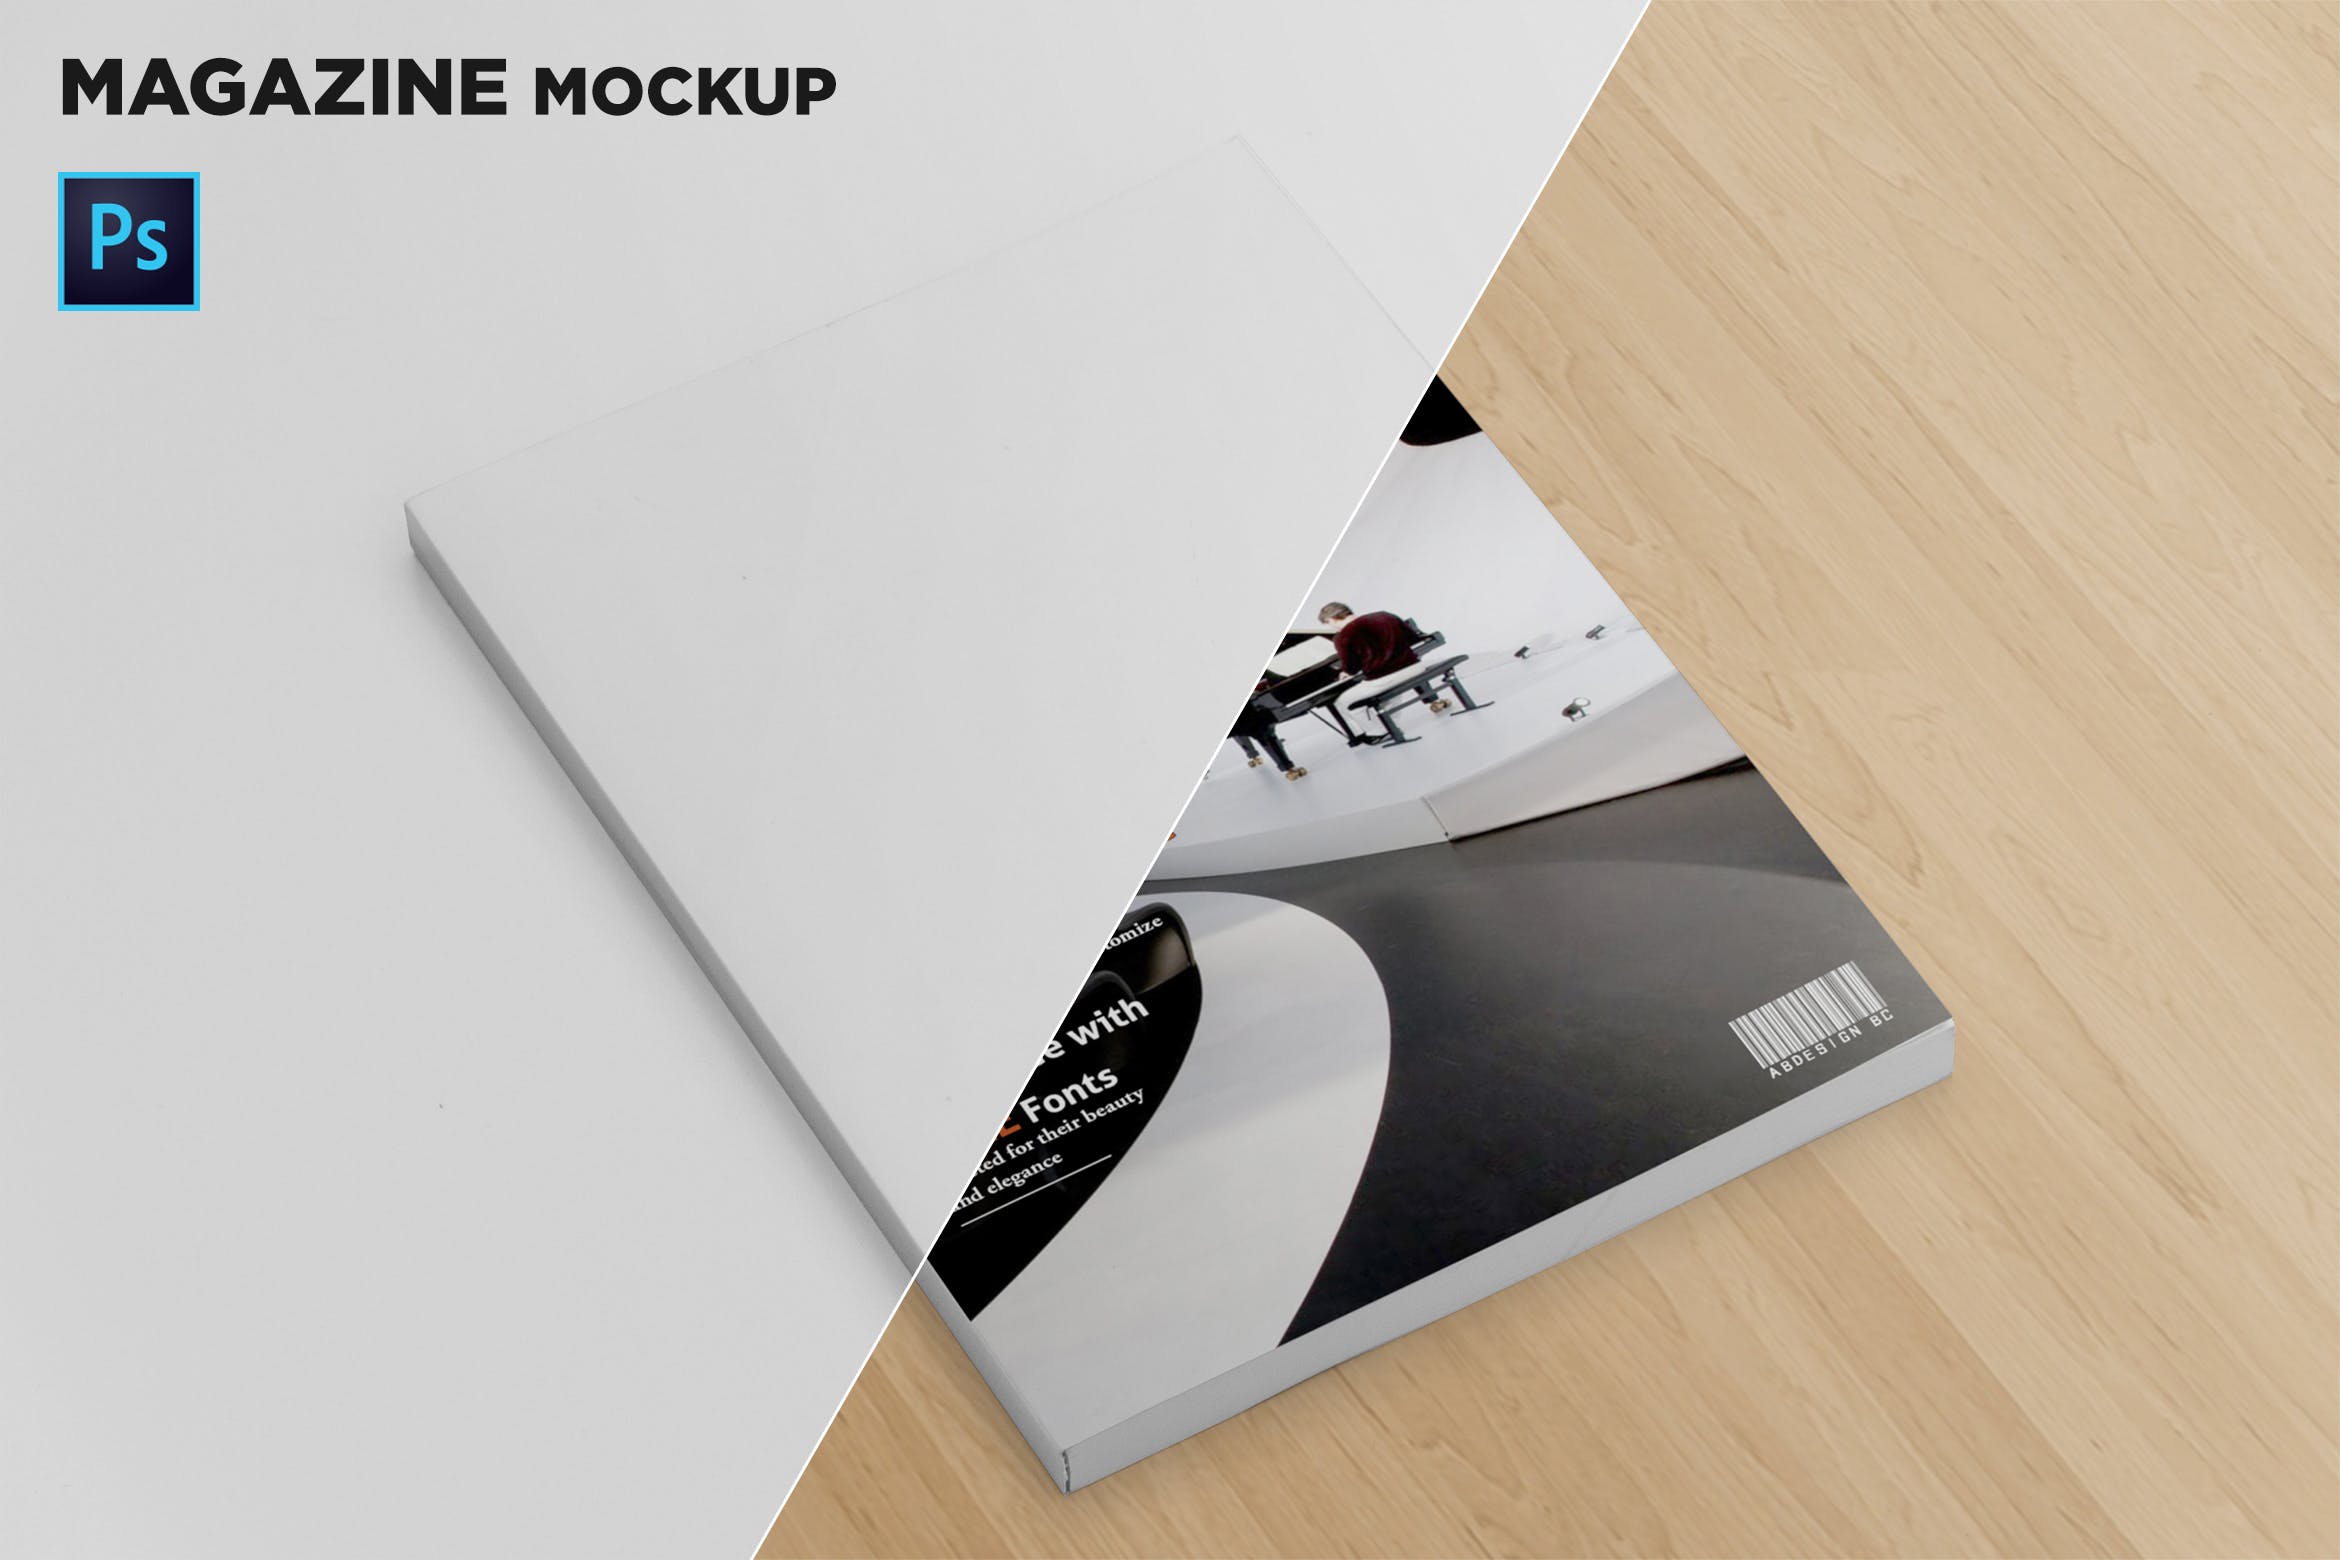 杂志封面设计透视图样机第一素材精选 Magazine Cover Mockup Perspective View插图